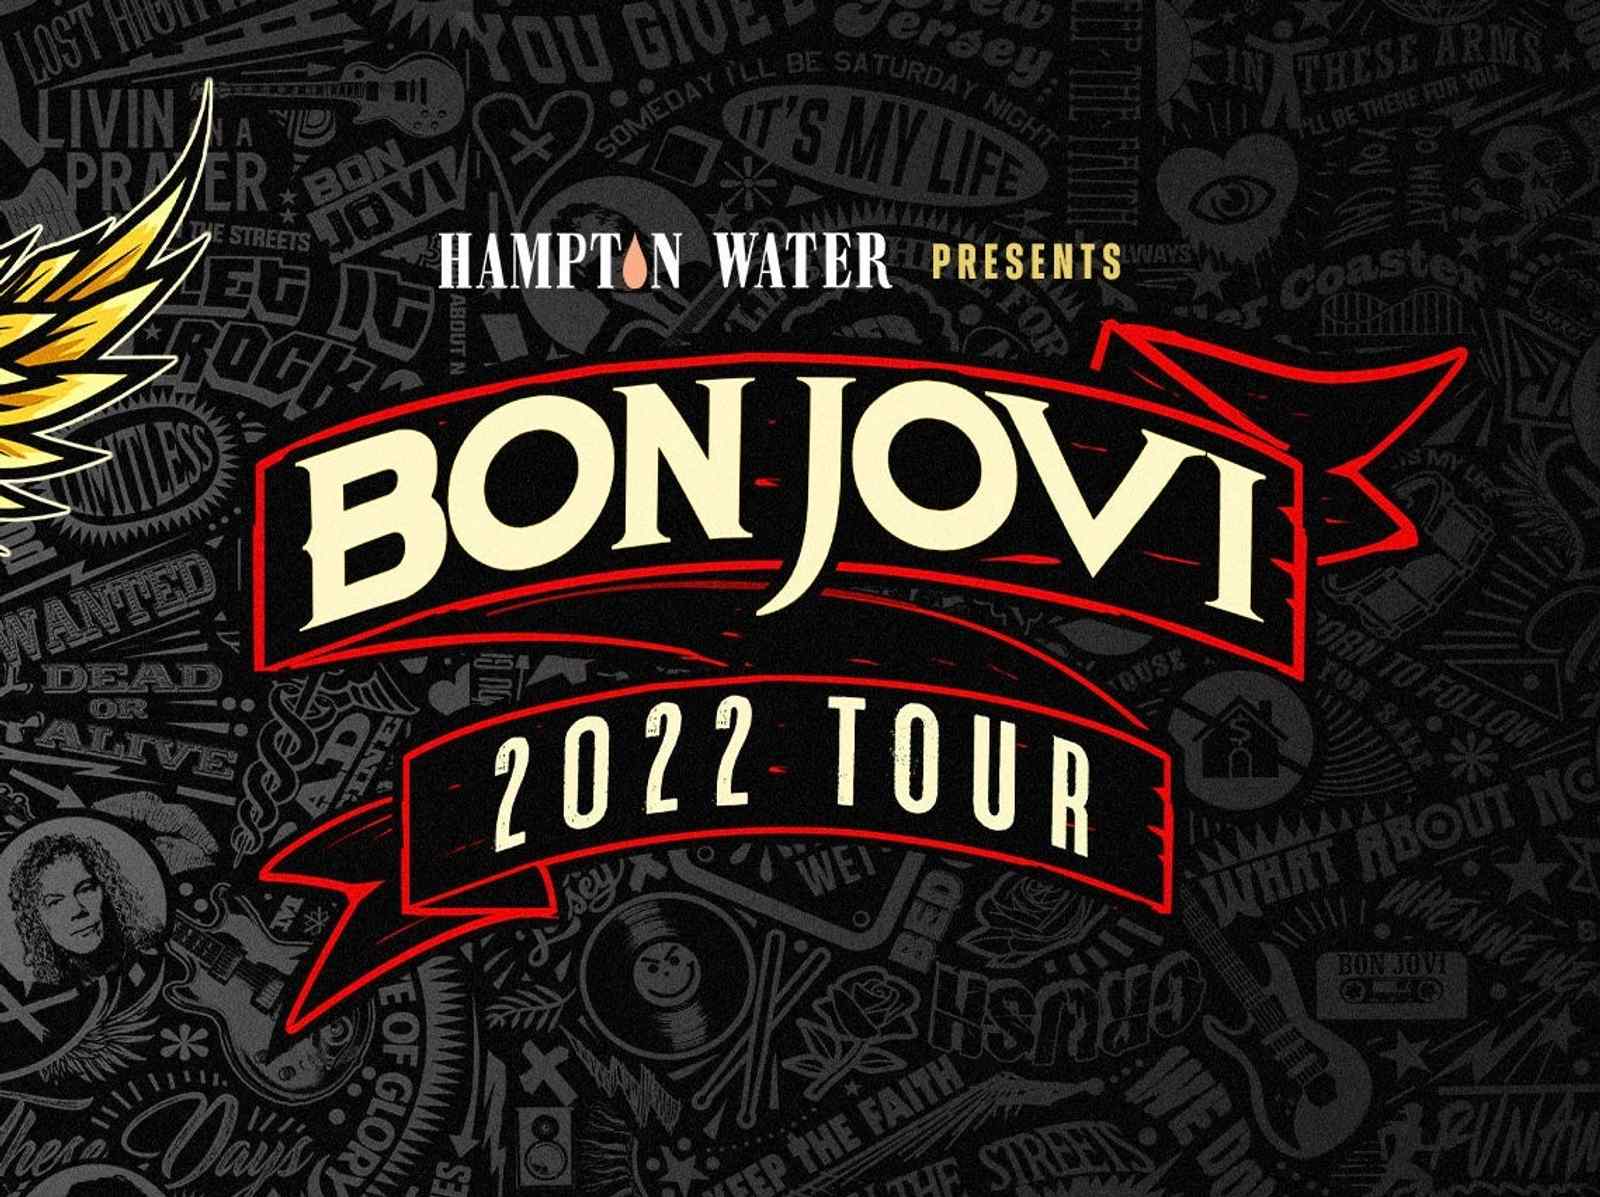 Hampton Water presents Bon Jovi